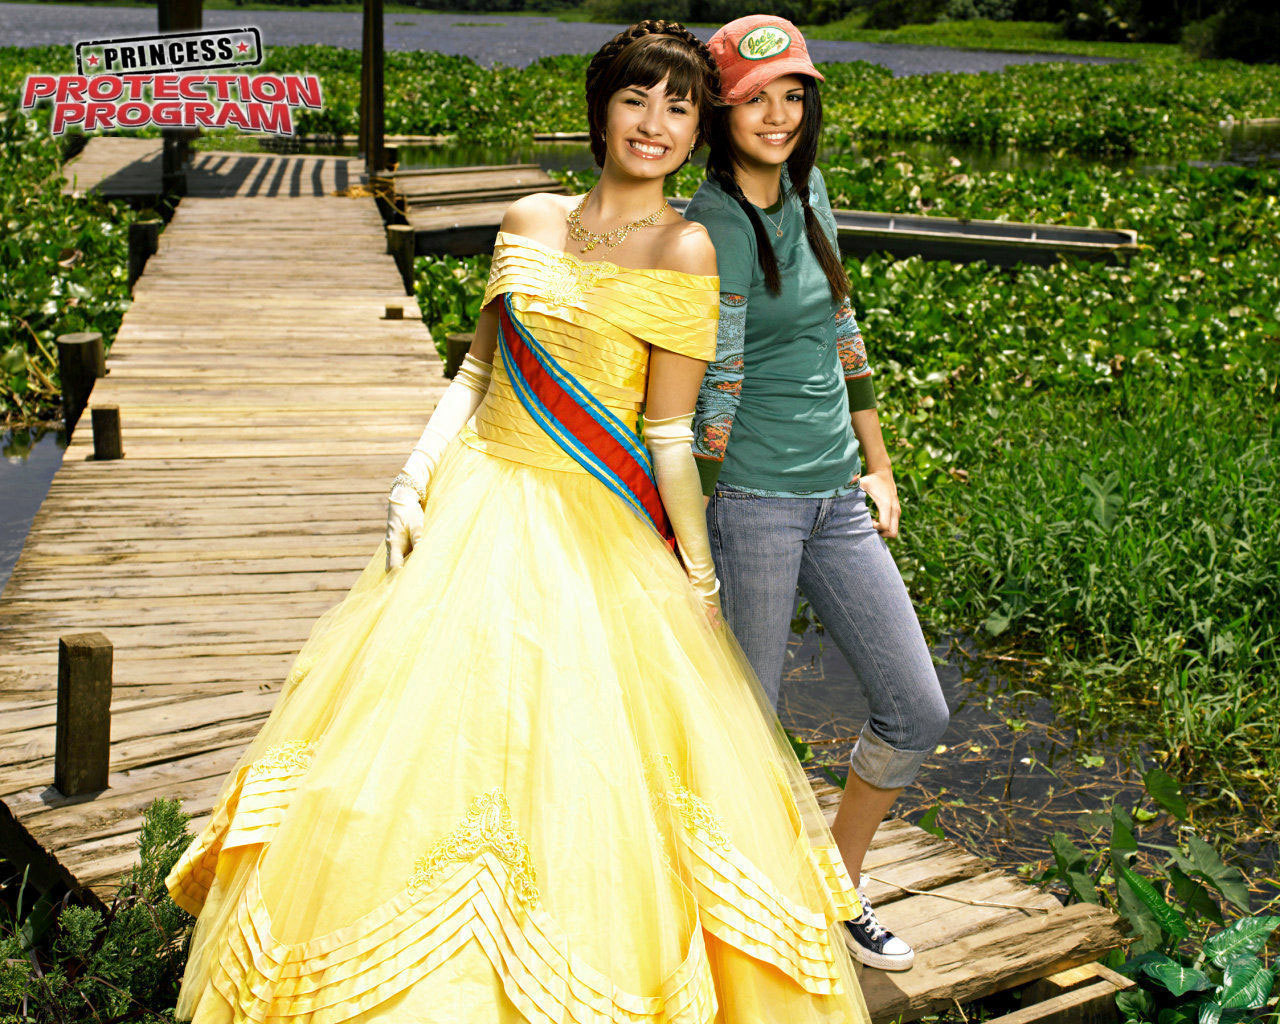 princess protection program - Disney Channel Girls Photo (11375904) - Fanpop